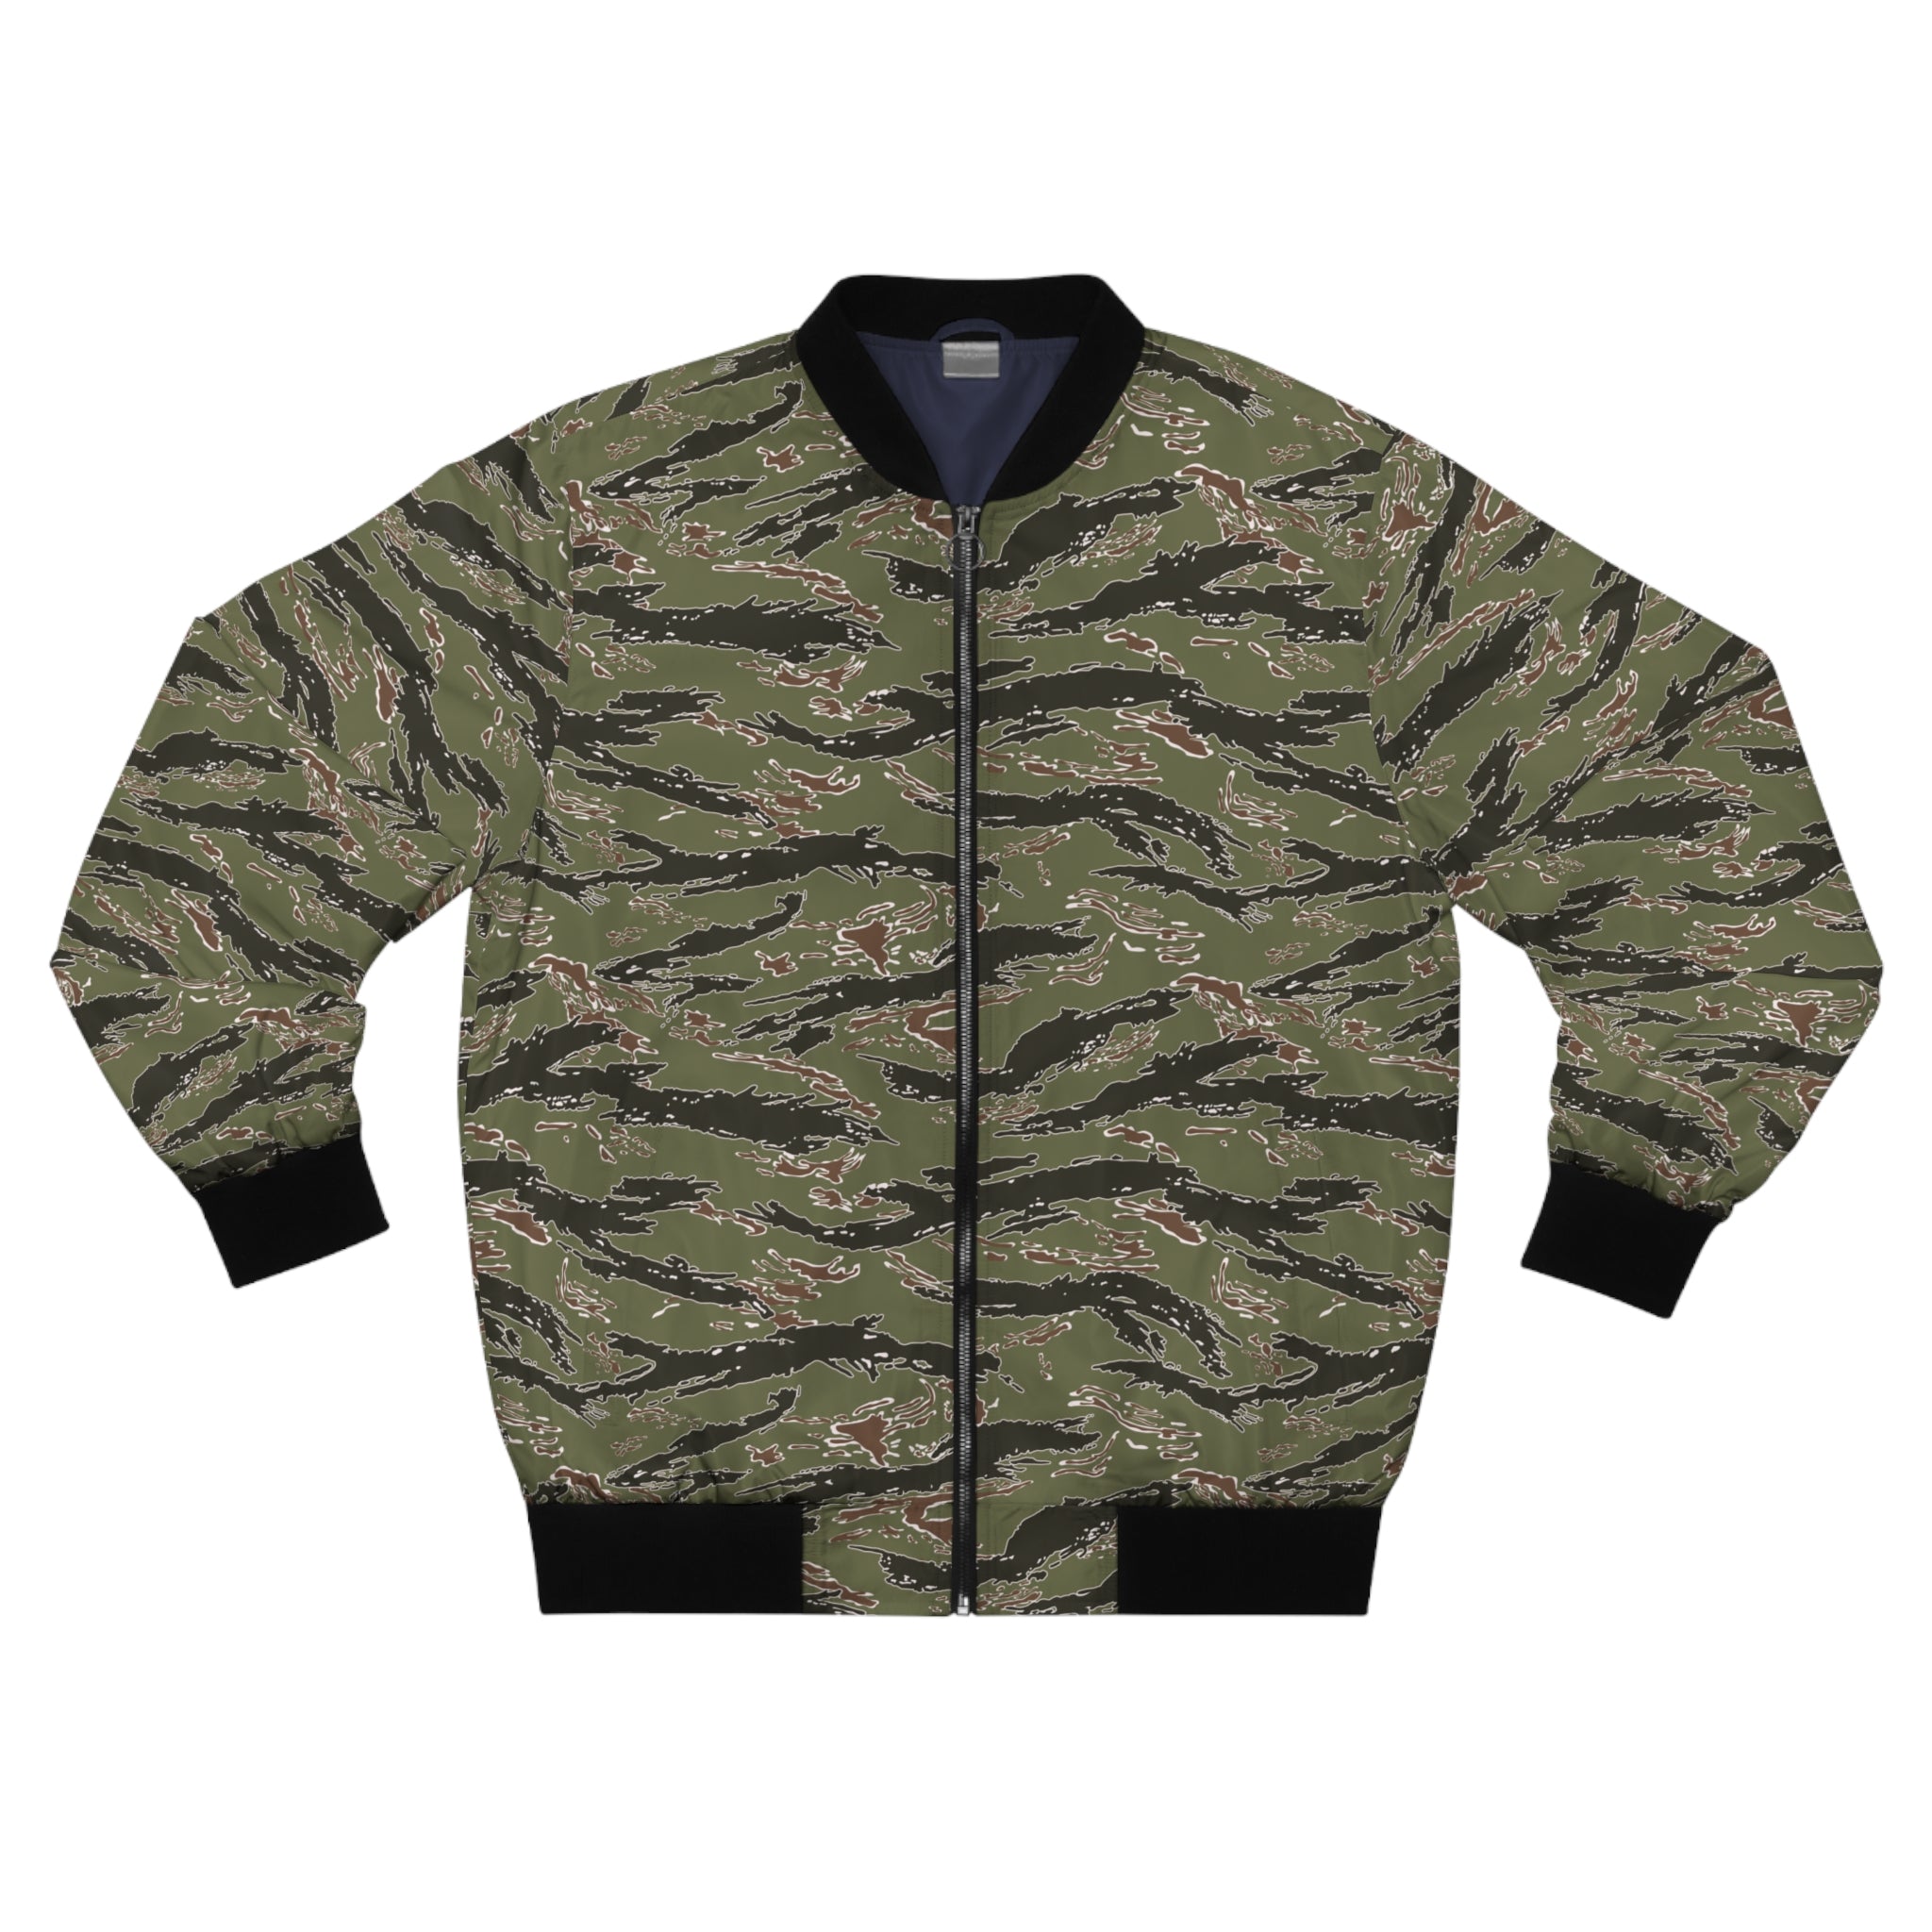 Men's Vietnam Tiger Military Camouflage Fashion Bomber Jacket